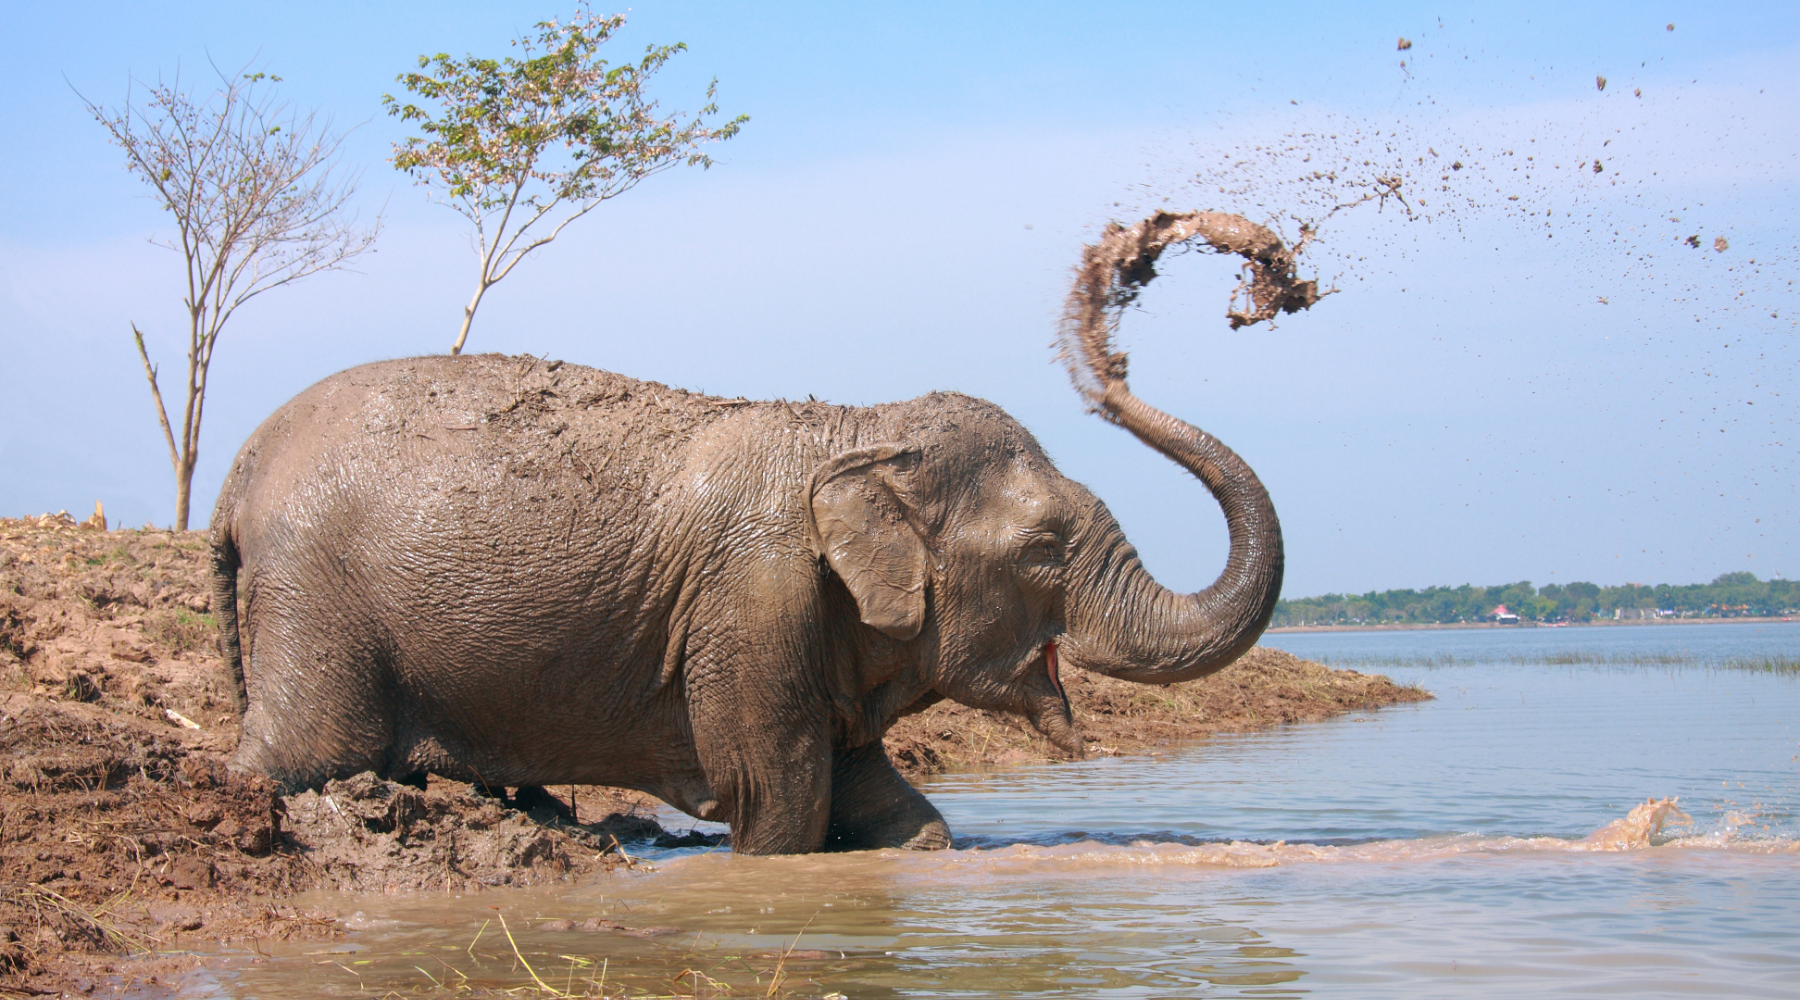 Elephant squirting water - wonderful wildlife